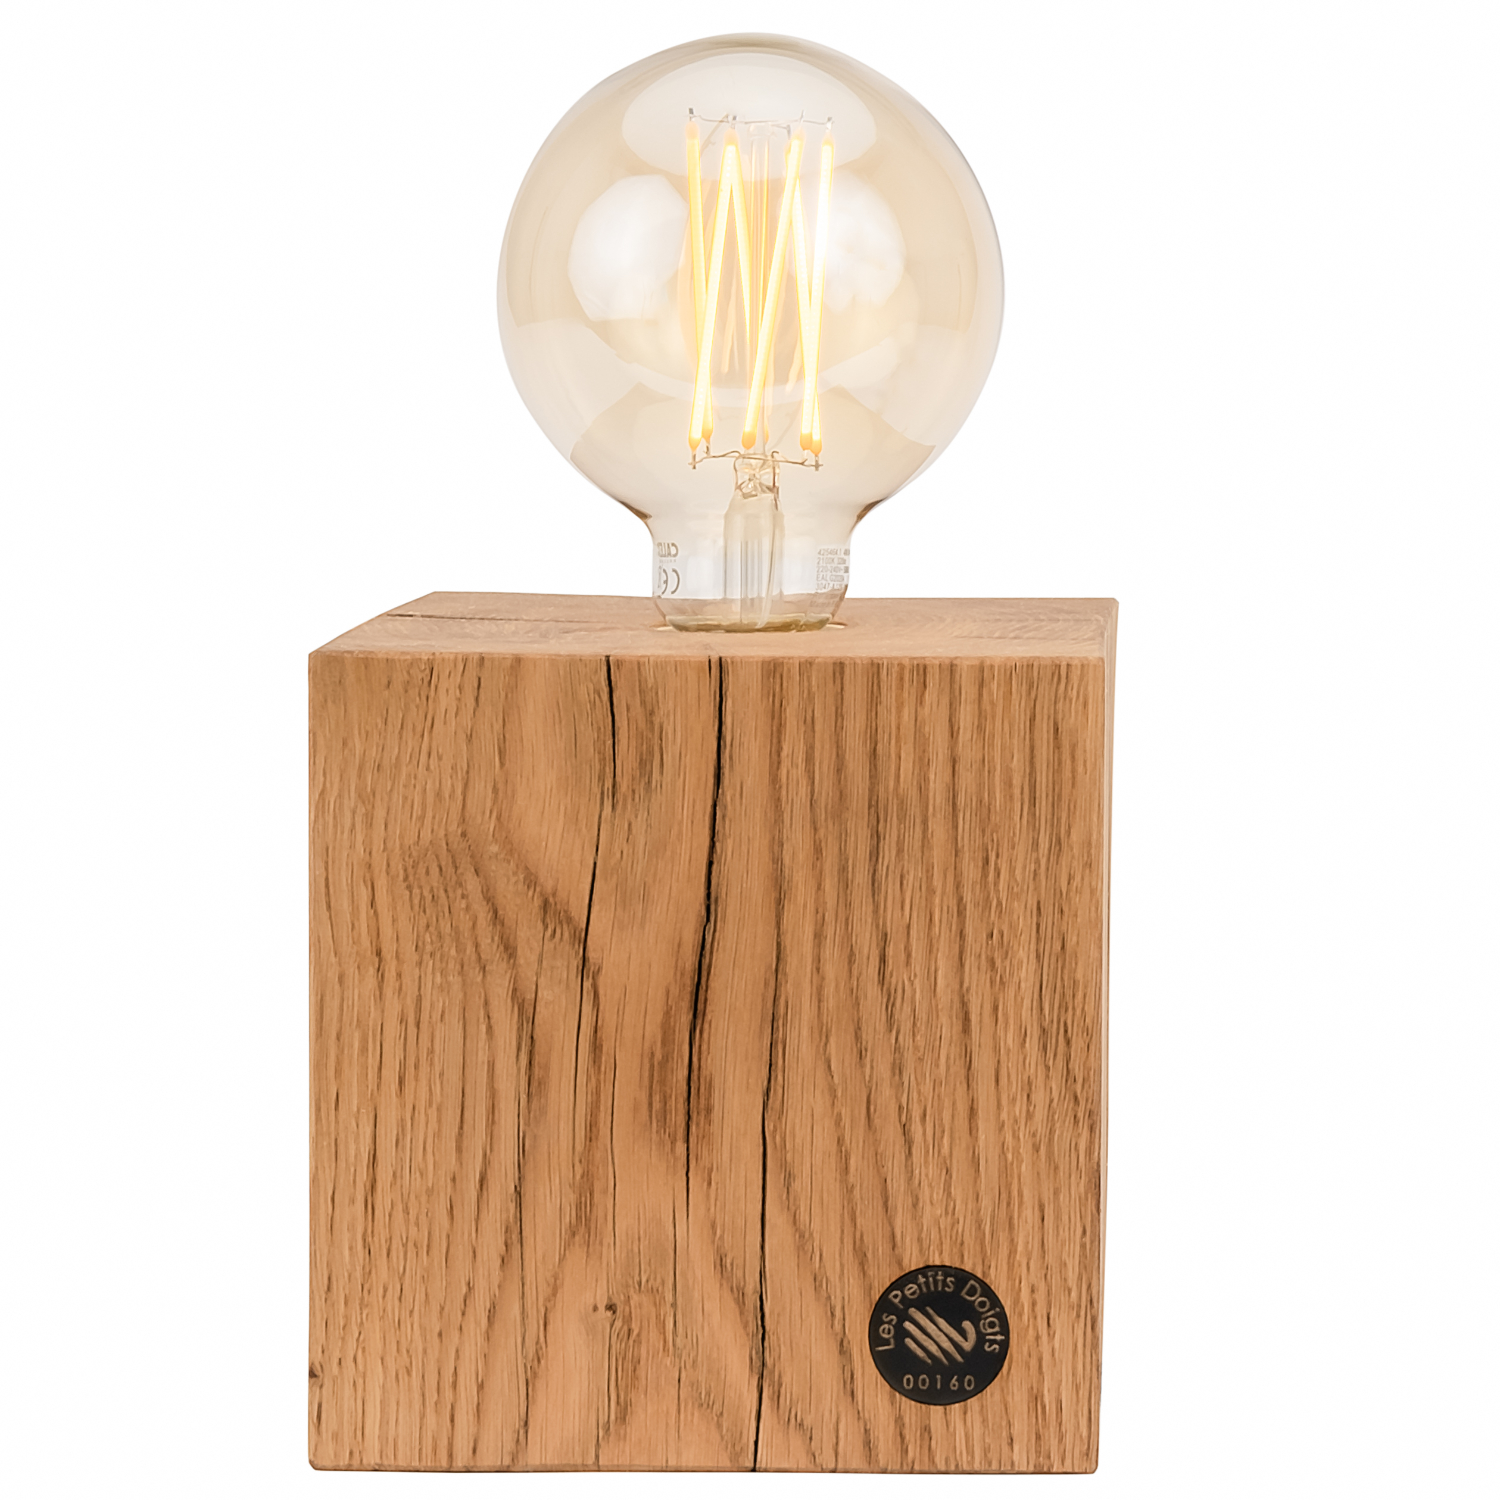 Middle Lopimont | Lampe artisanale en bois